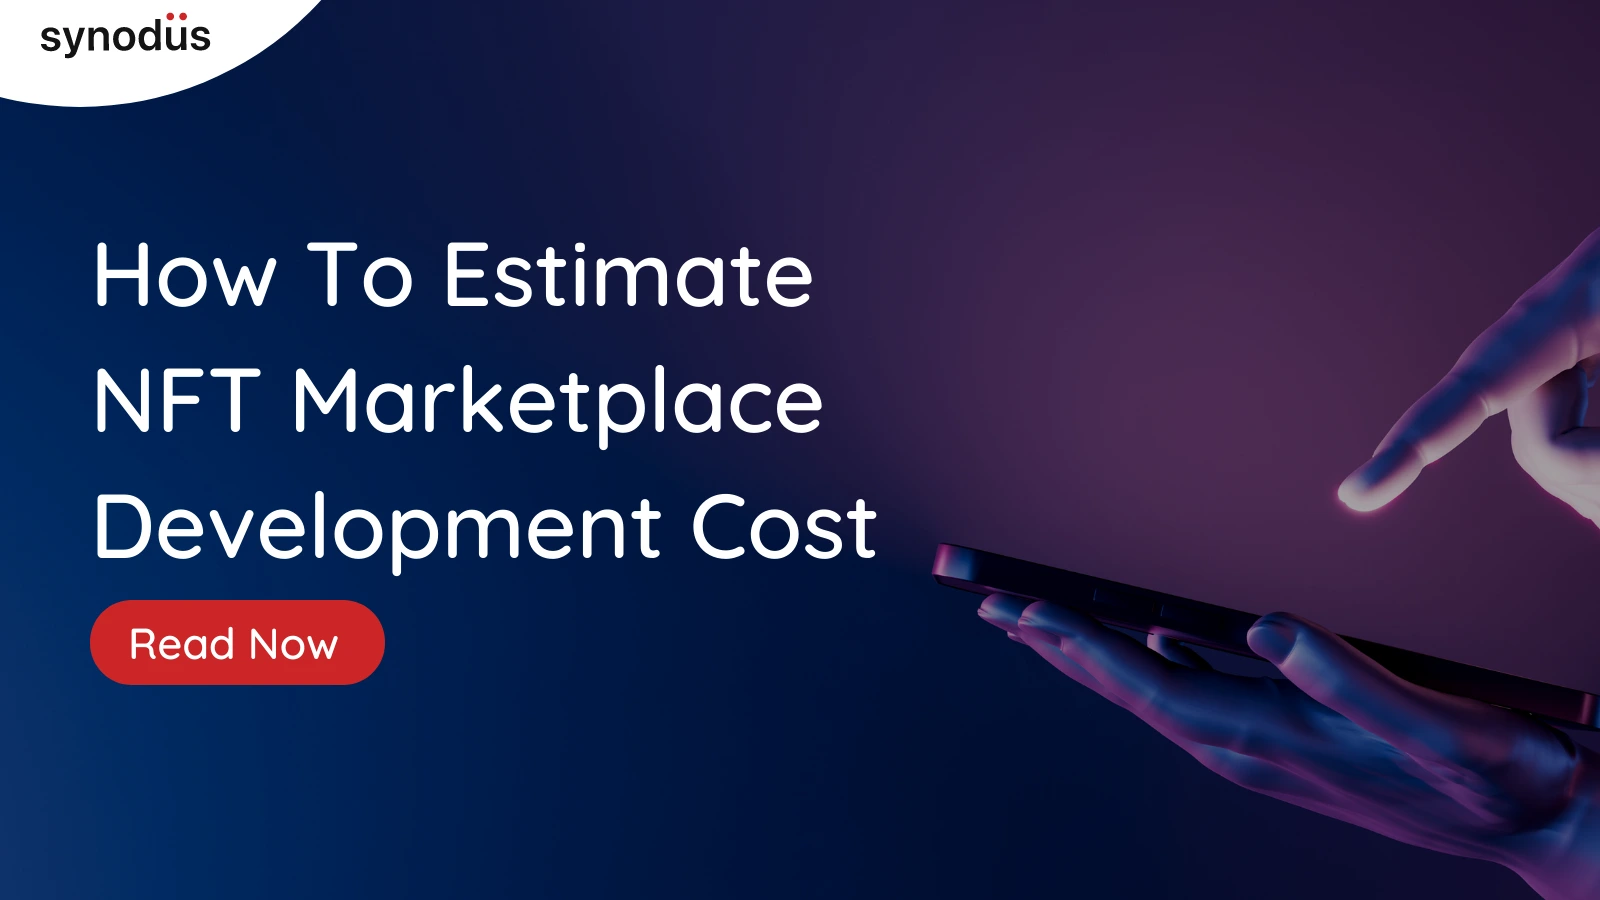 How To Estimate NFT Marketplace Development Cost